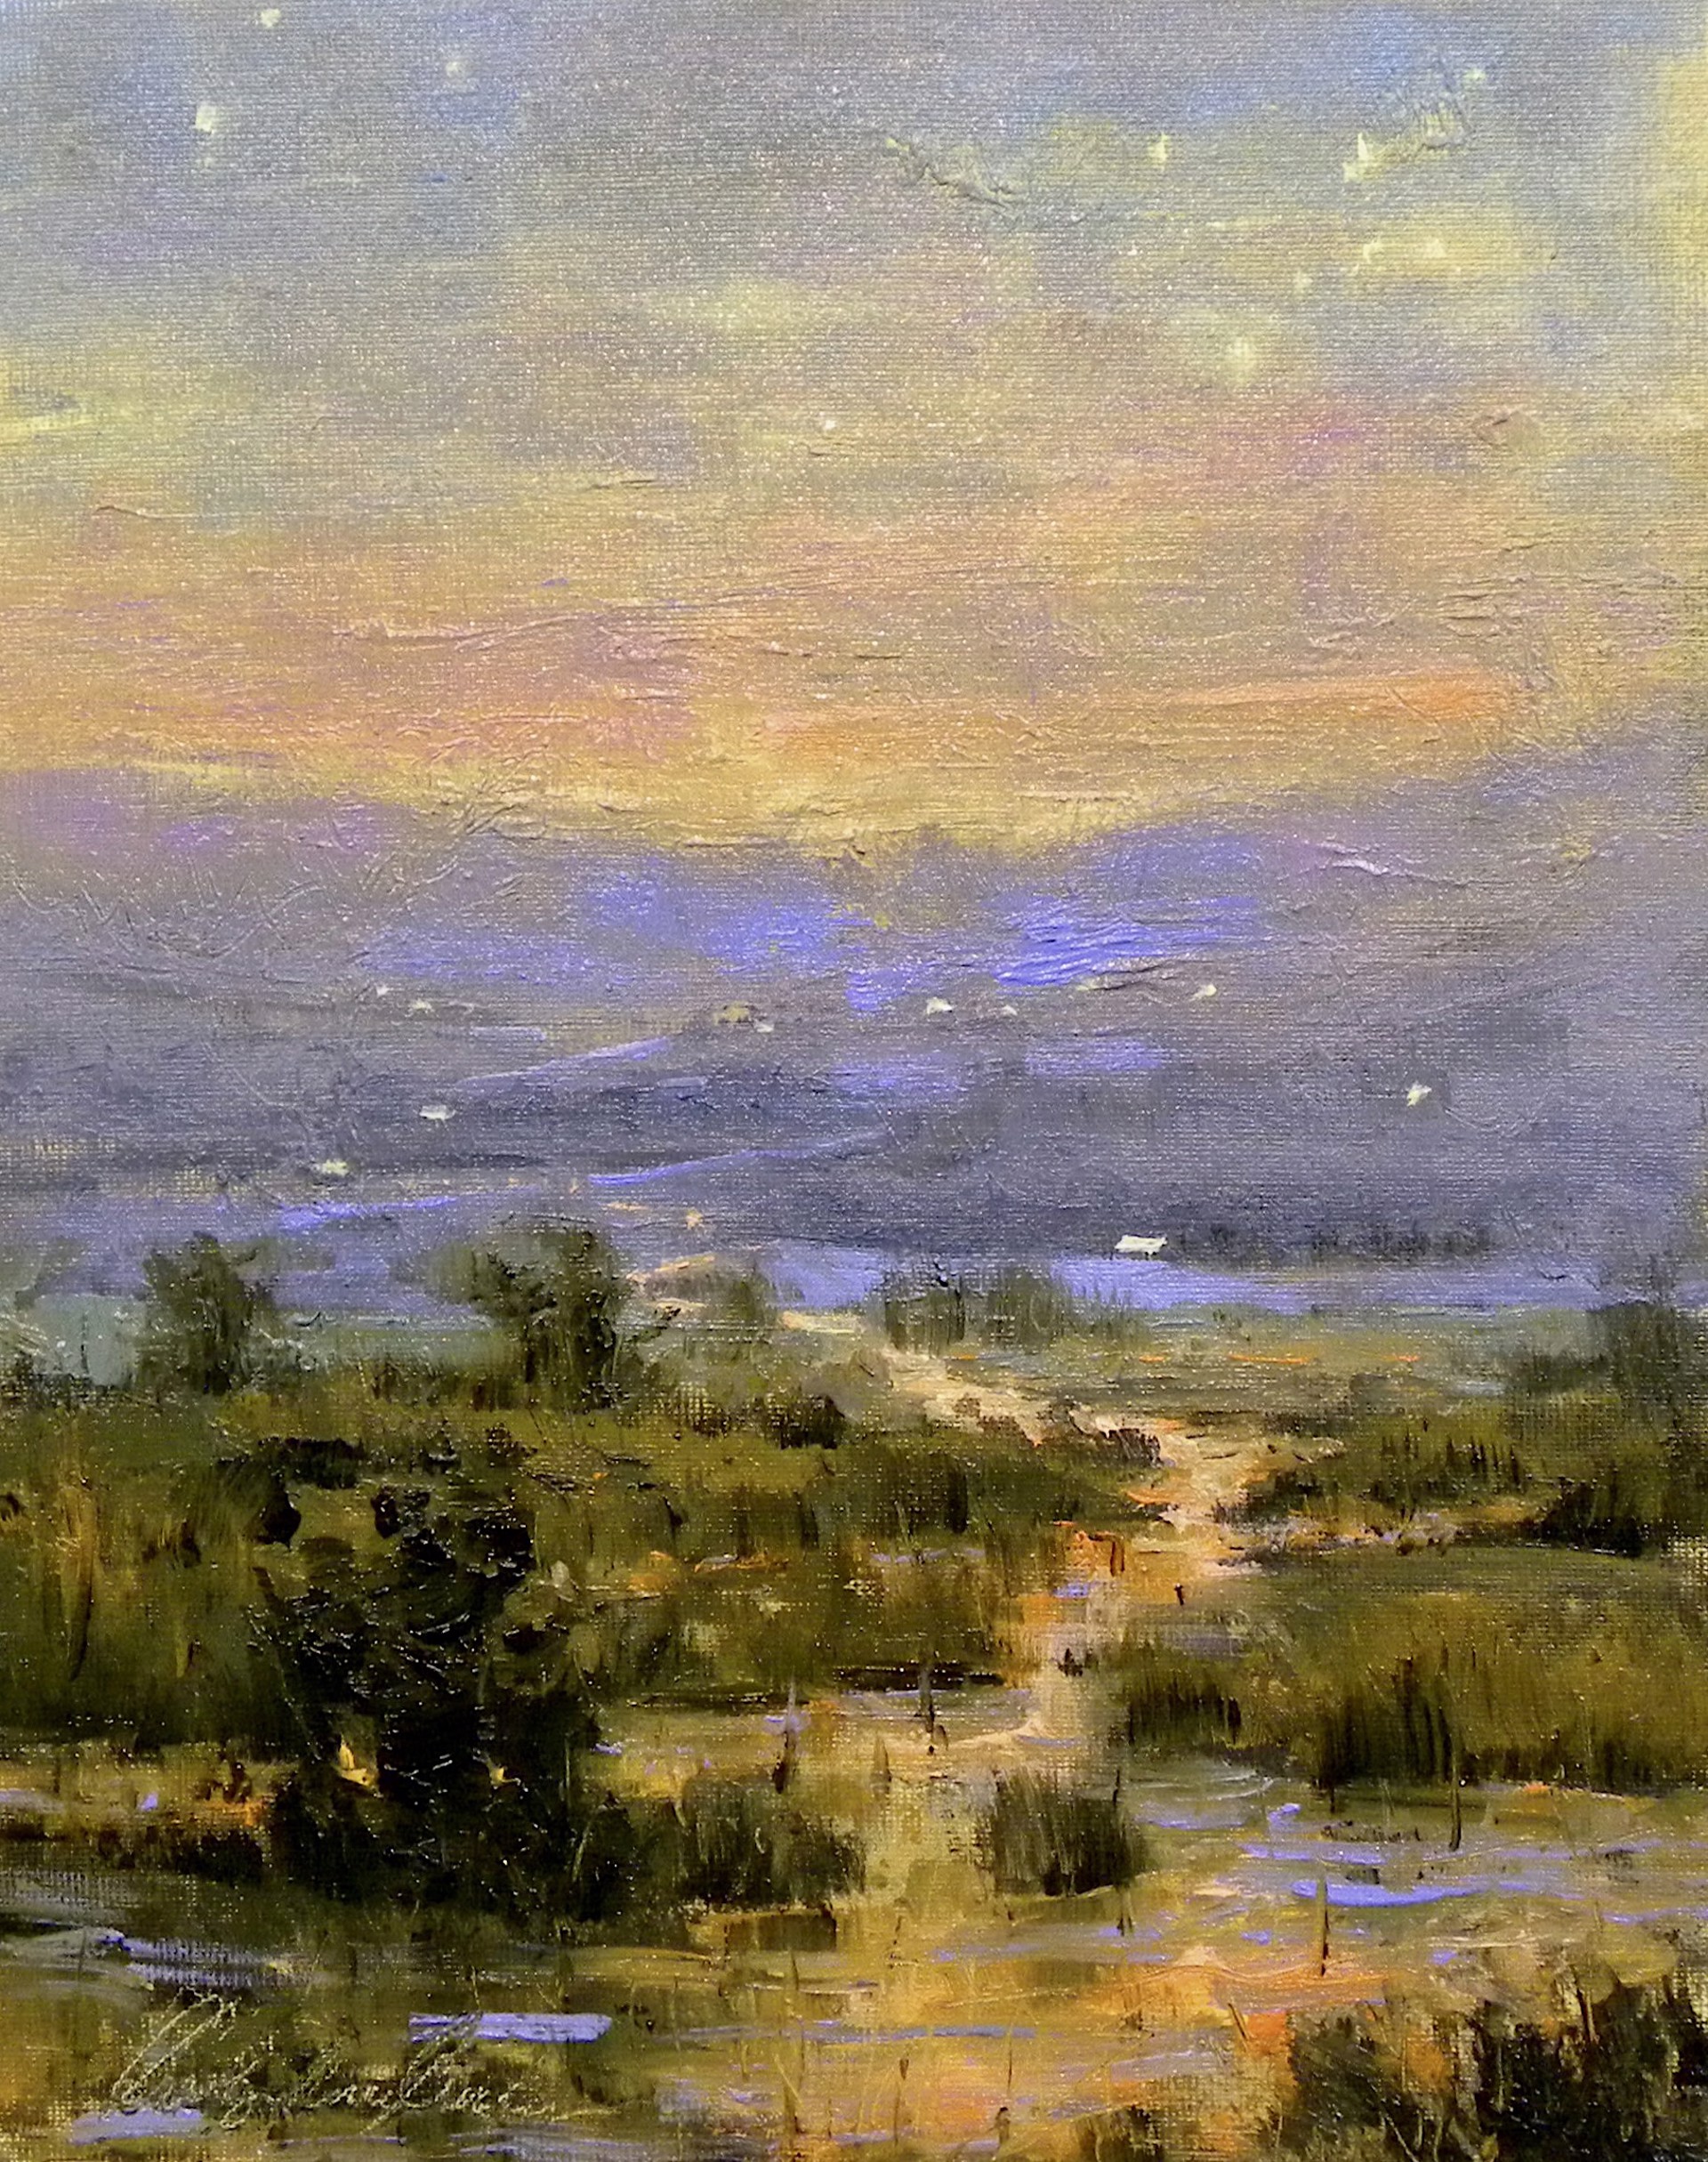 Evening Marsh by Carolyn Anne Crocker